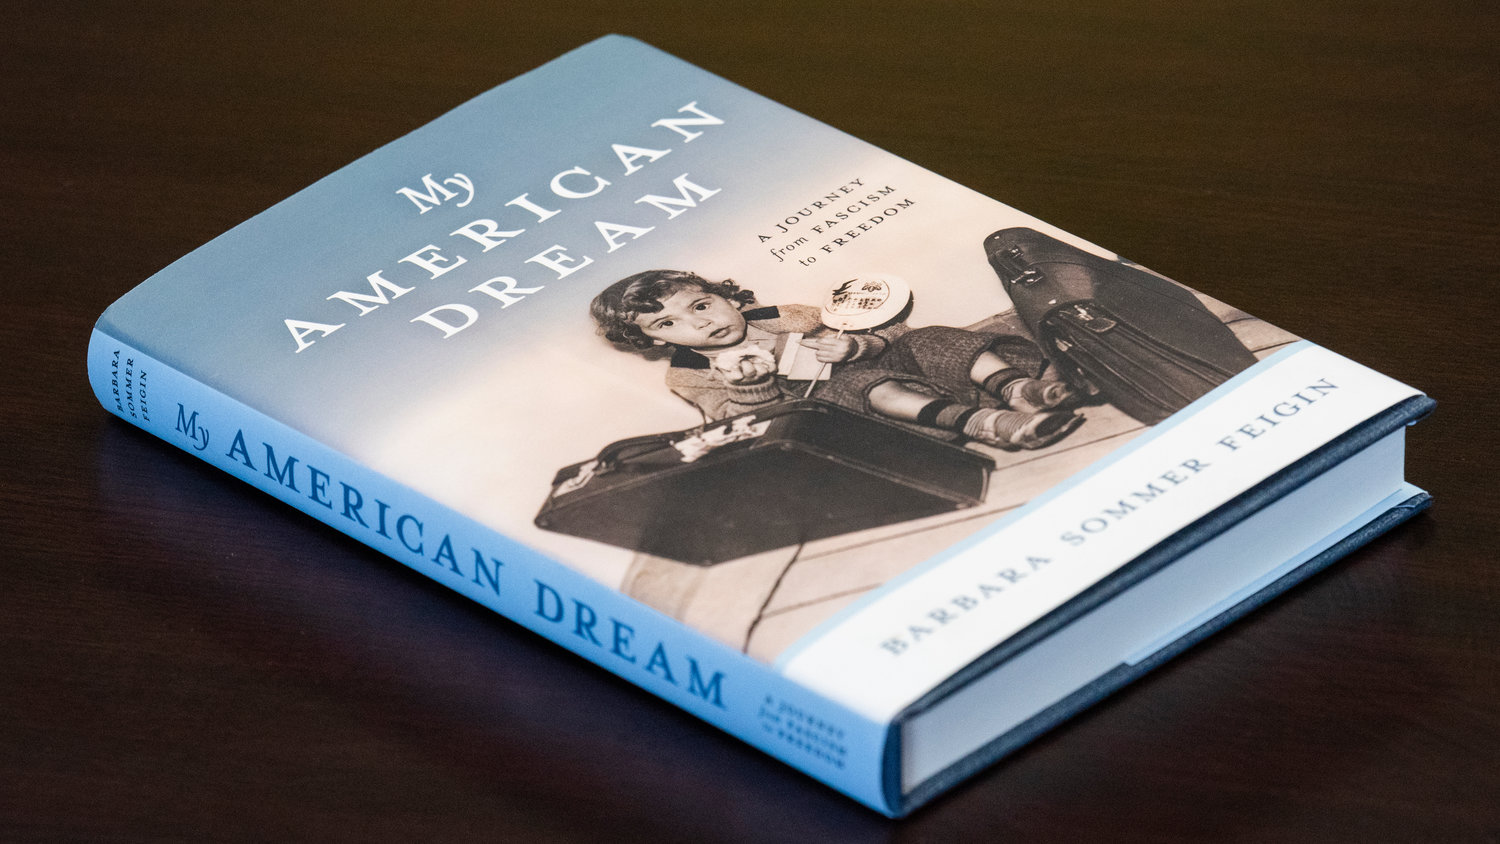 Barbara Sommer Feigin’s book “My American Dream” sits on display in Chehalis.